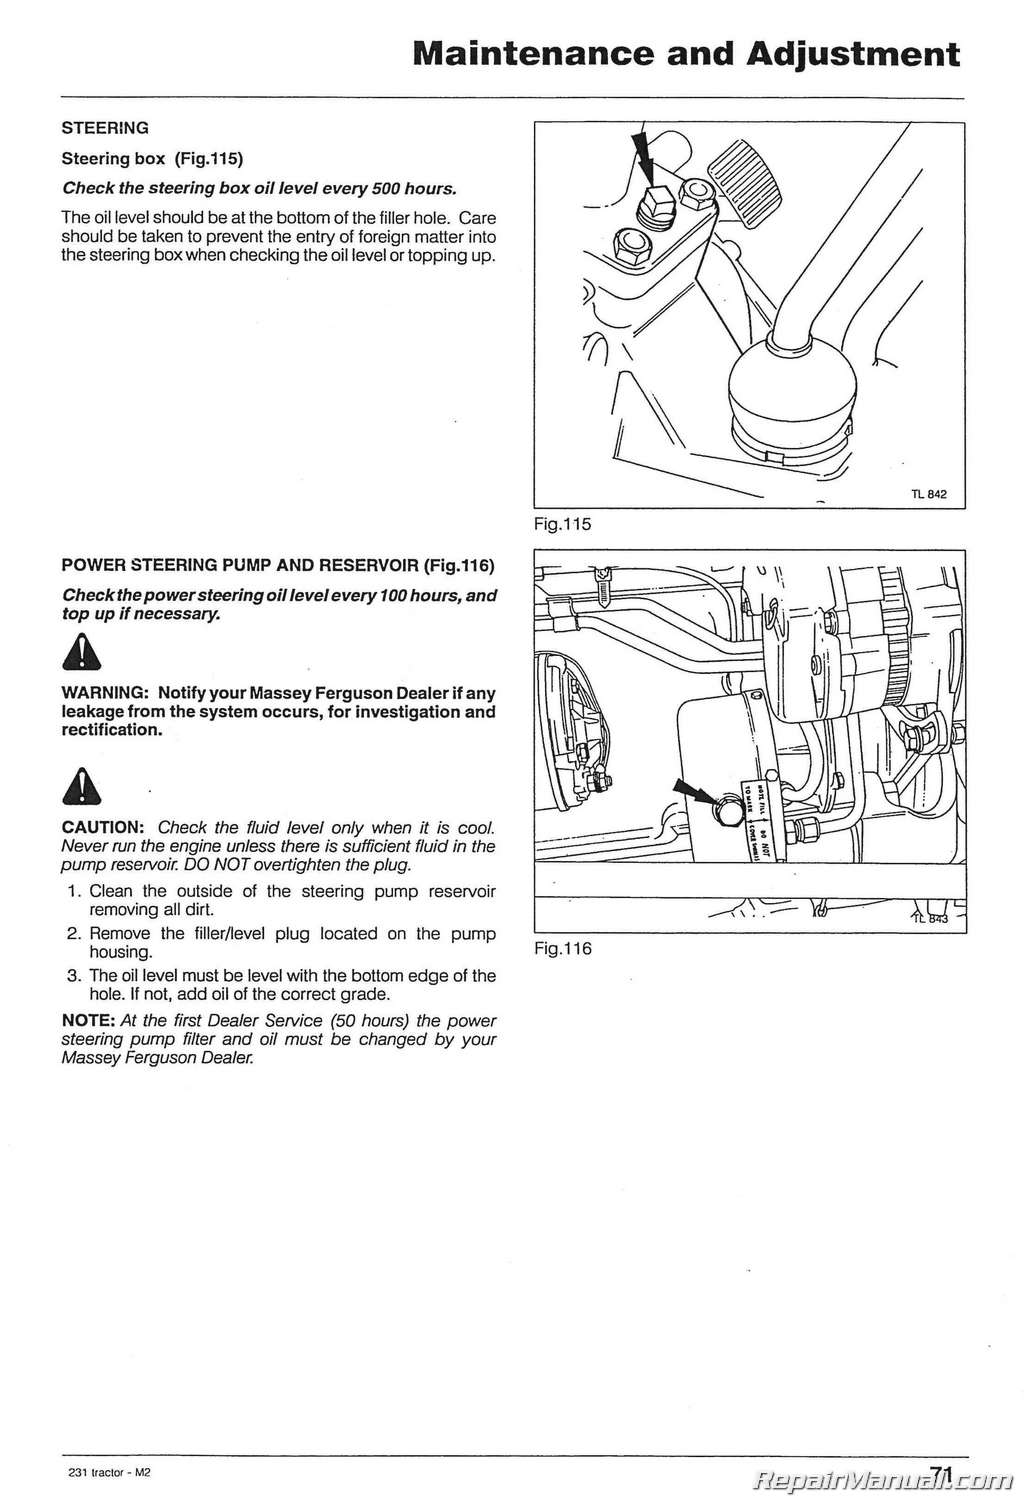 Massey Ferguson 231 Tractor Operator Instruction Book